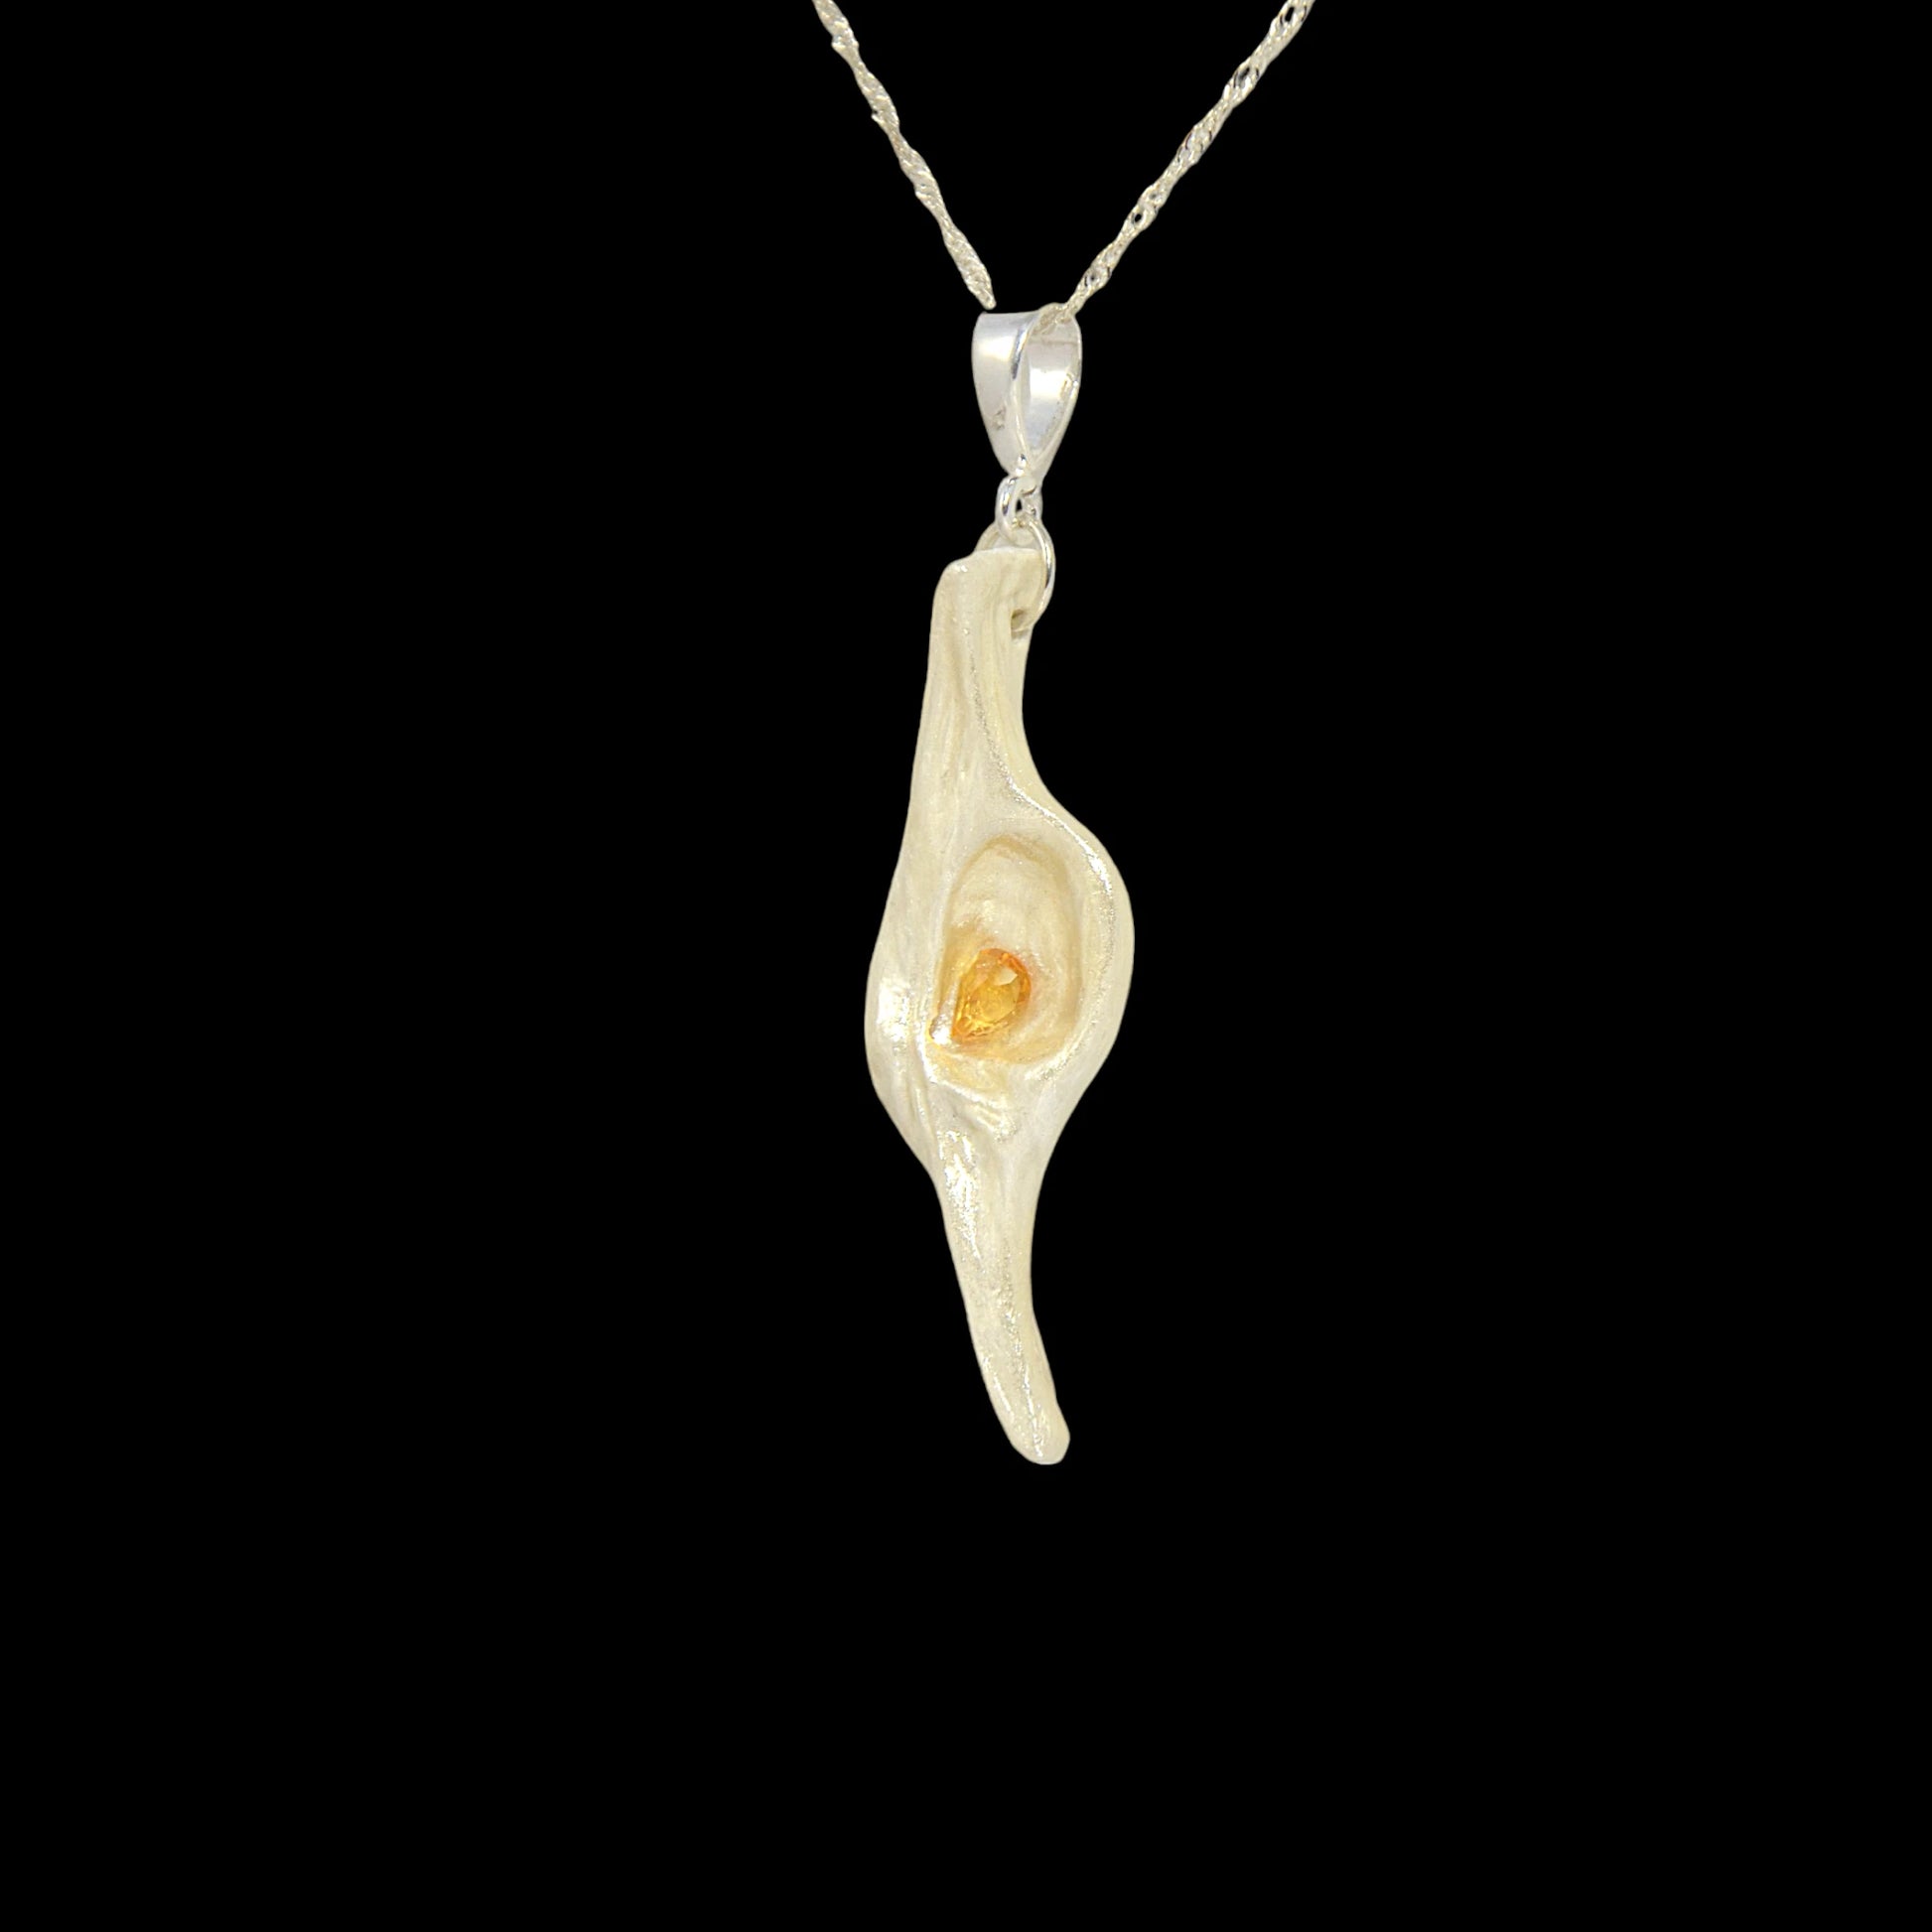 Lightmaker natural seashell pendant A beautiful pear shaped rose cut Citrine compliments the pendant.